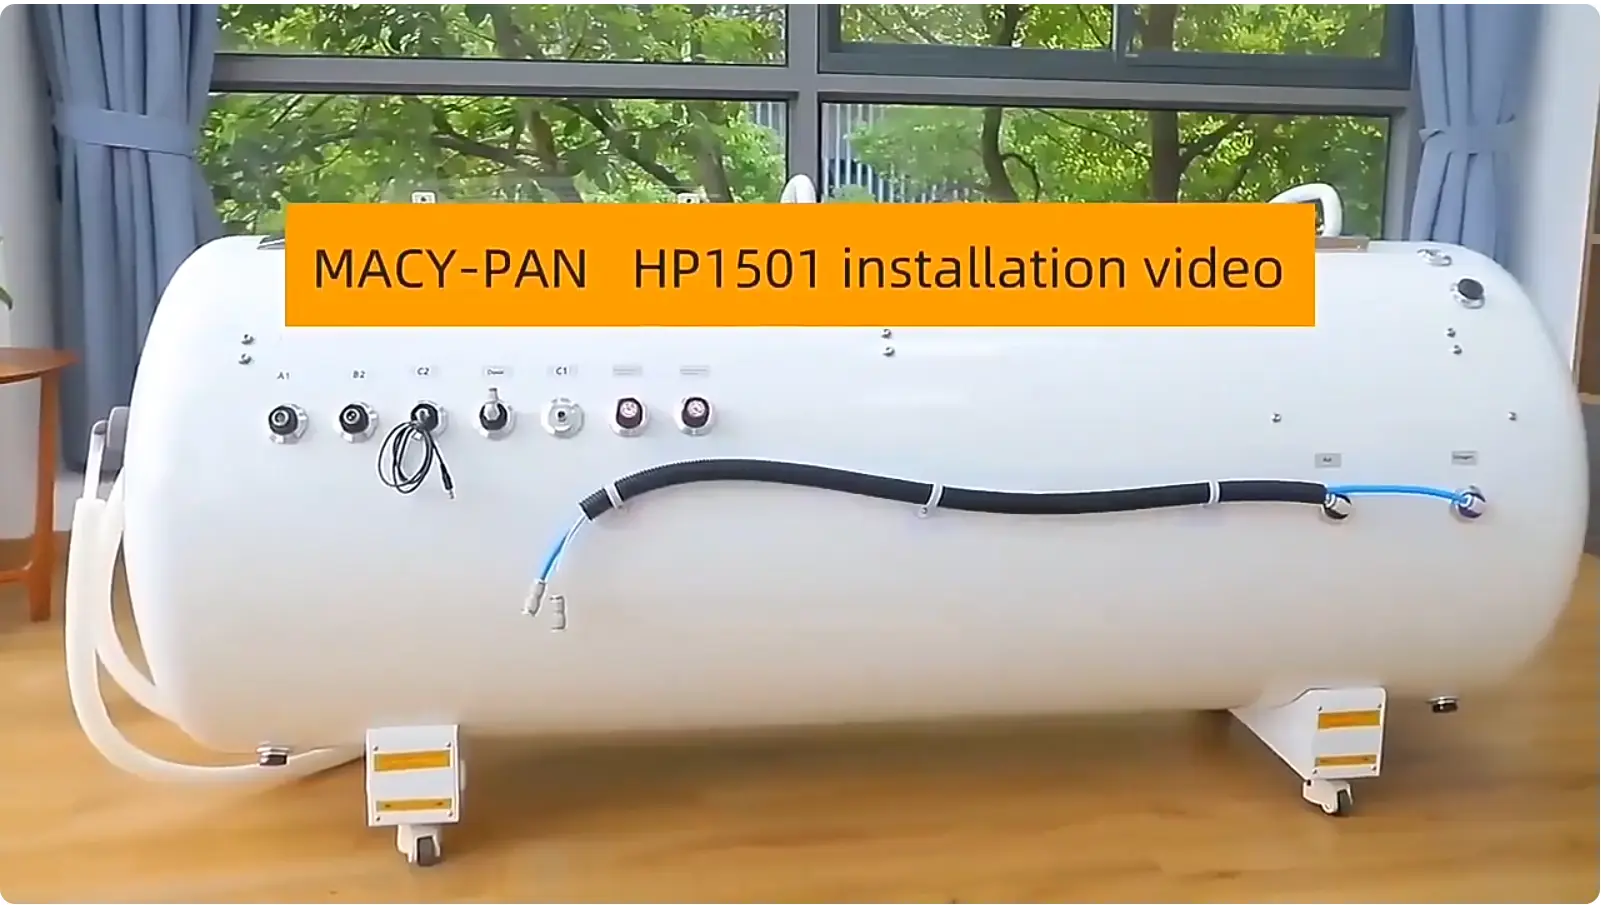 MACY-PAN HP1501 Installation Video